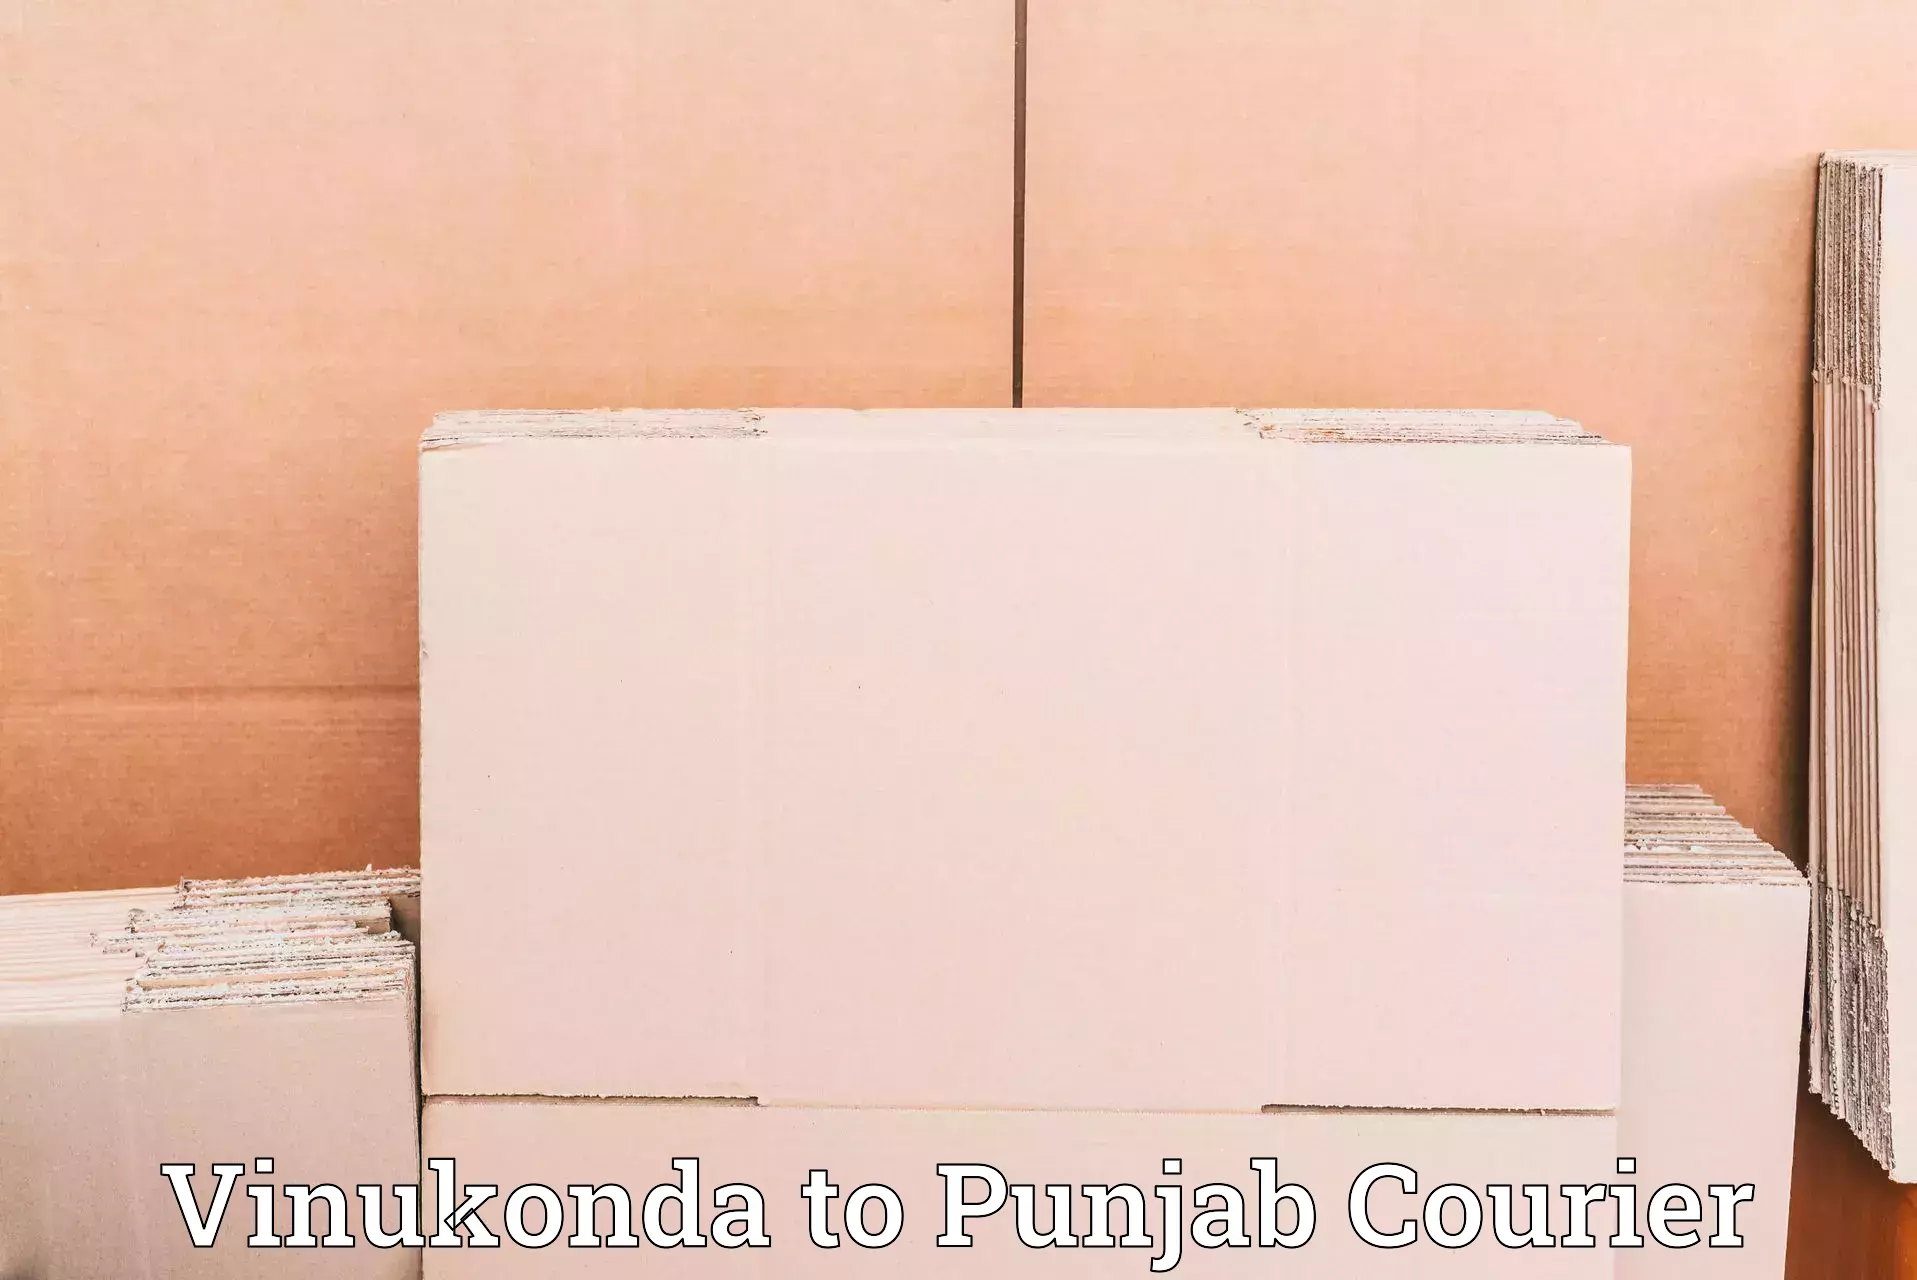 Next-day delivery options Vinukonda to Punjab